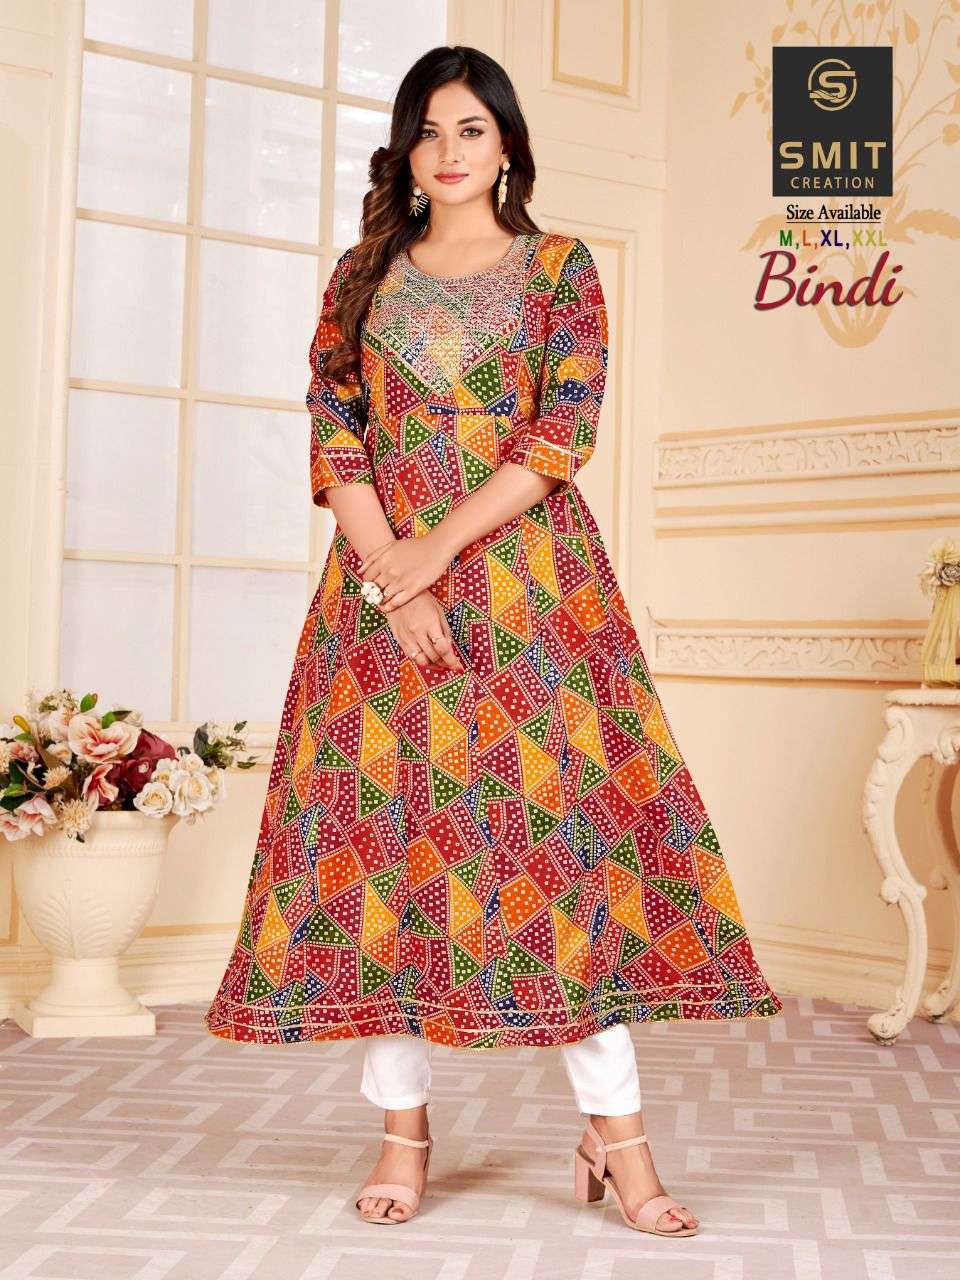 smit creation bindi gown series 1001-1004 pure cotton slub kurti 